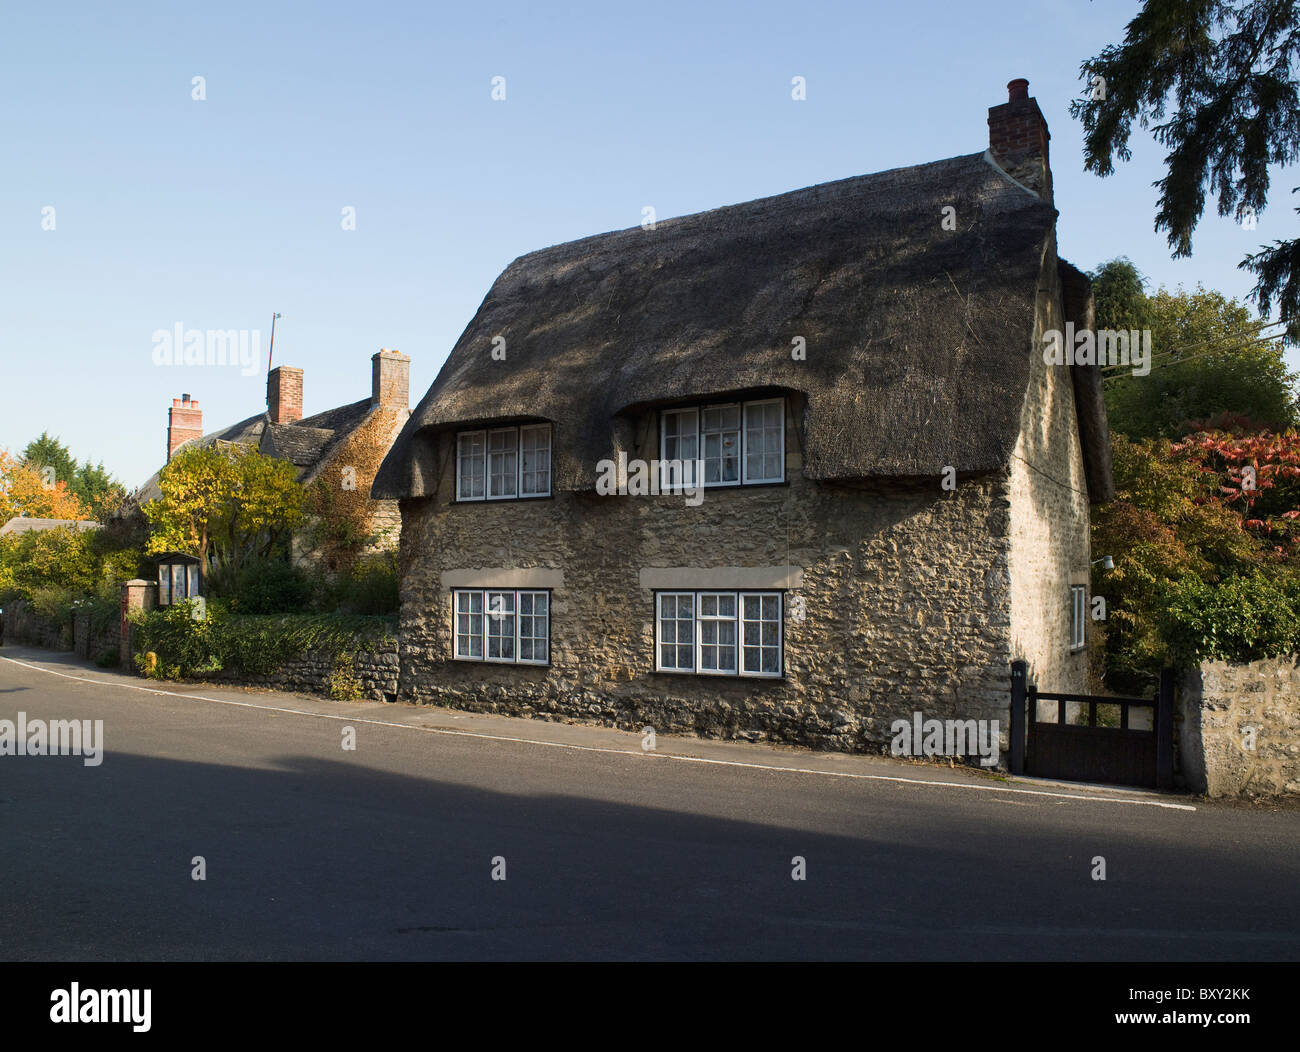 Wytham village, Oxfordshire. Stock Photo